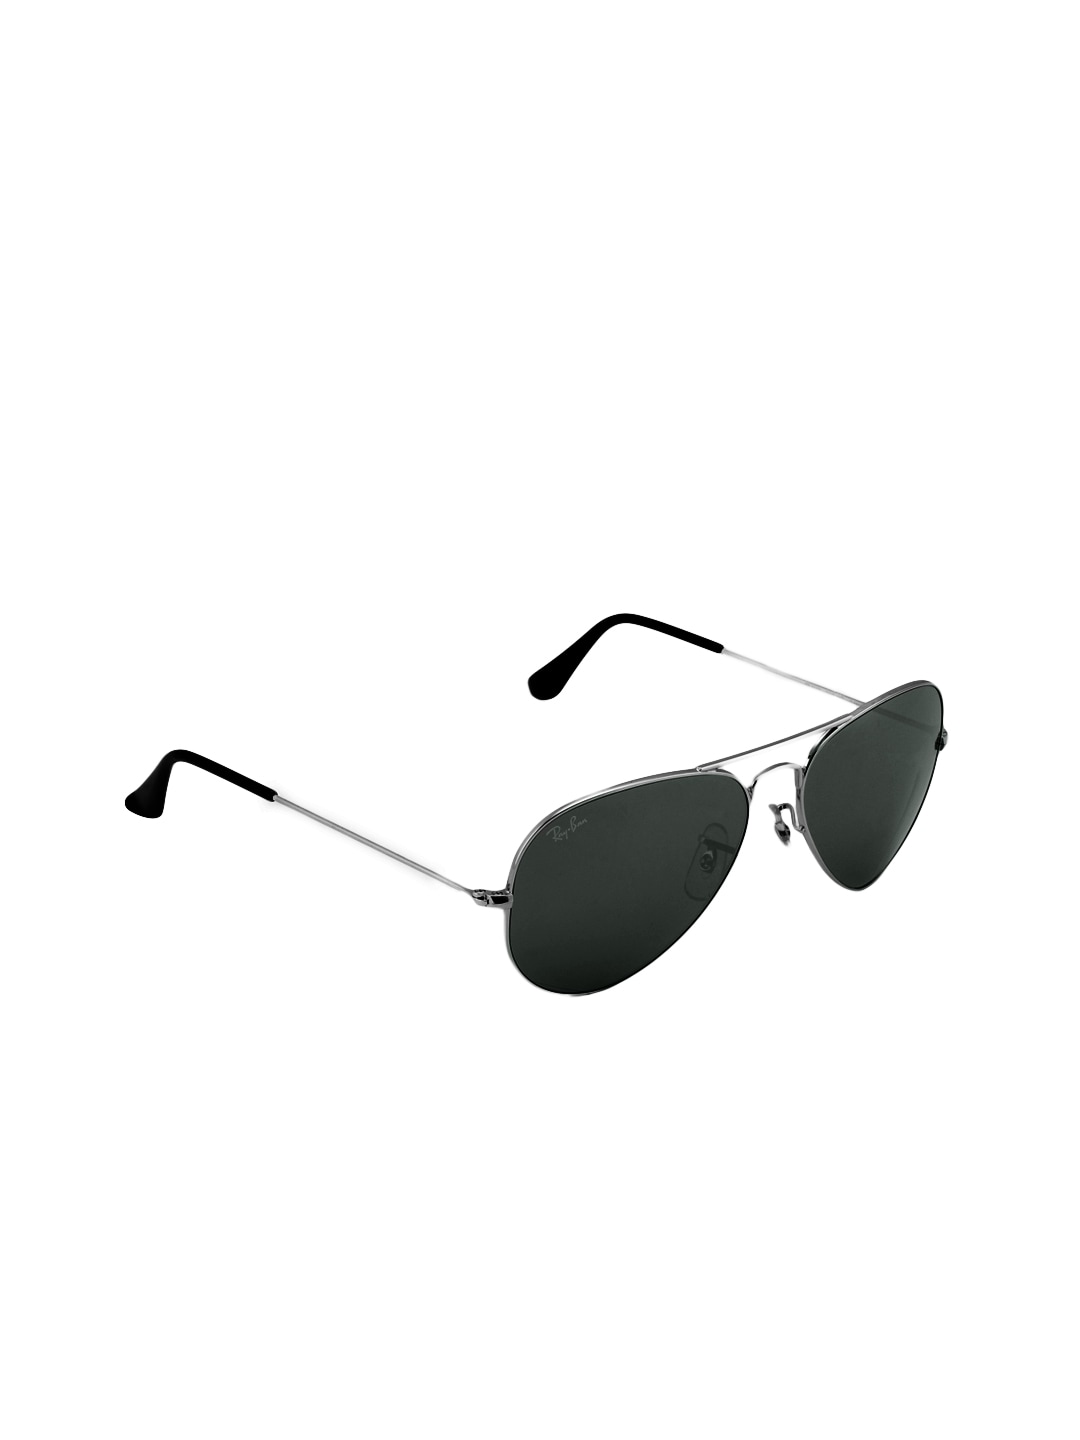 Ray-Ban Men Aviator Steel Sunglasses